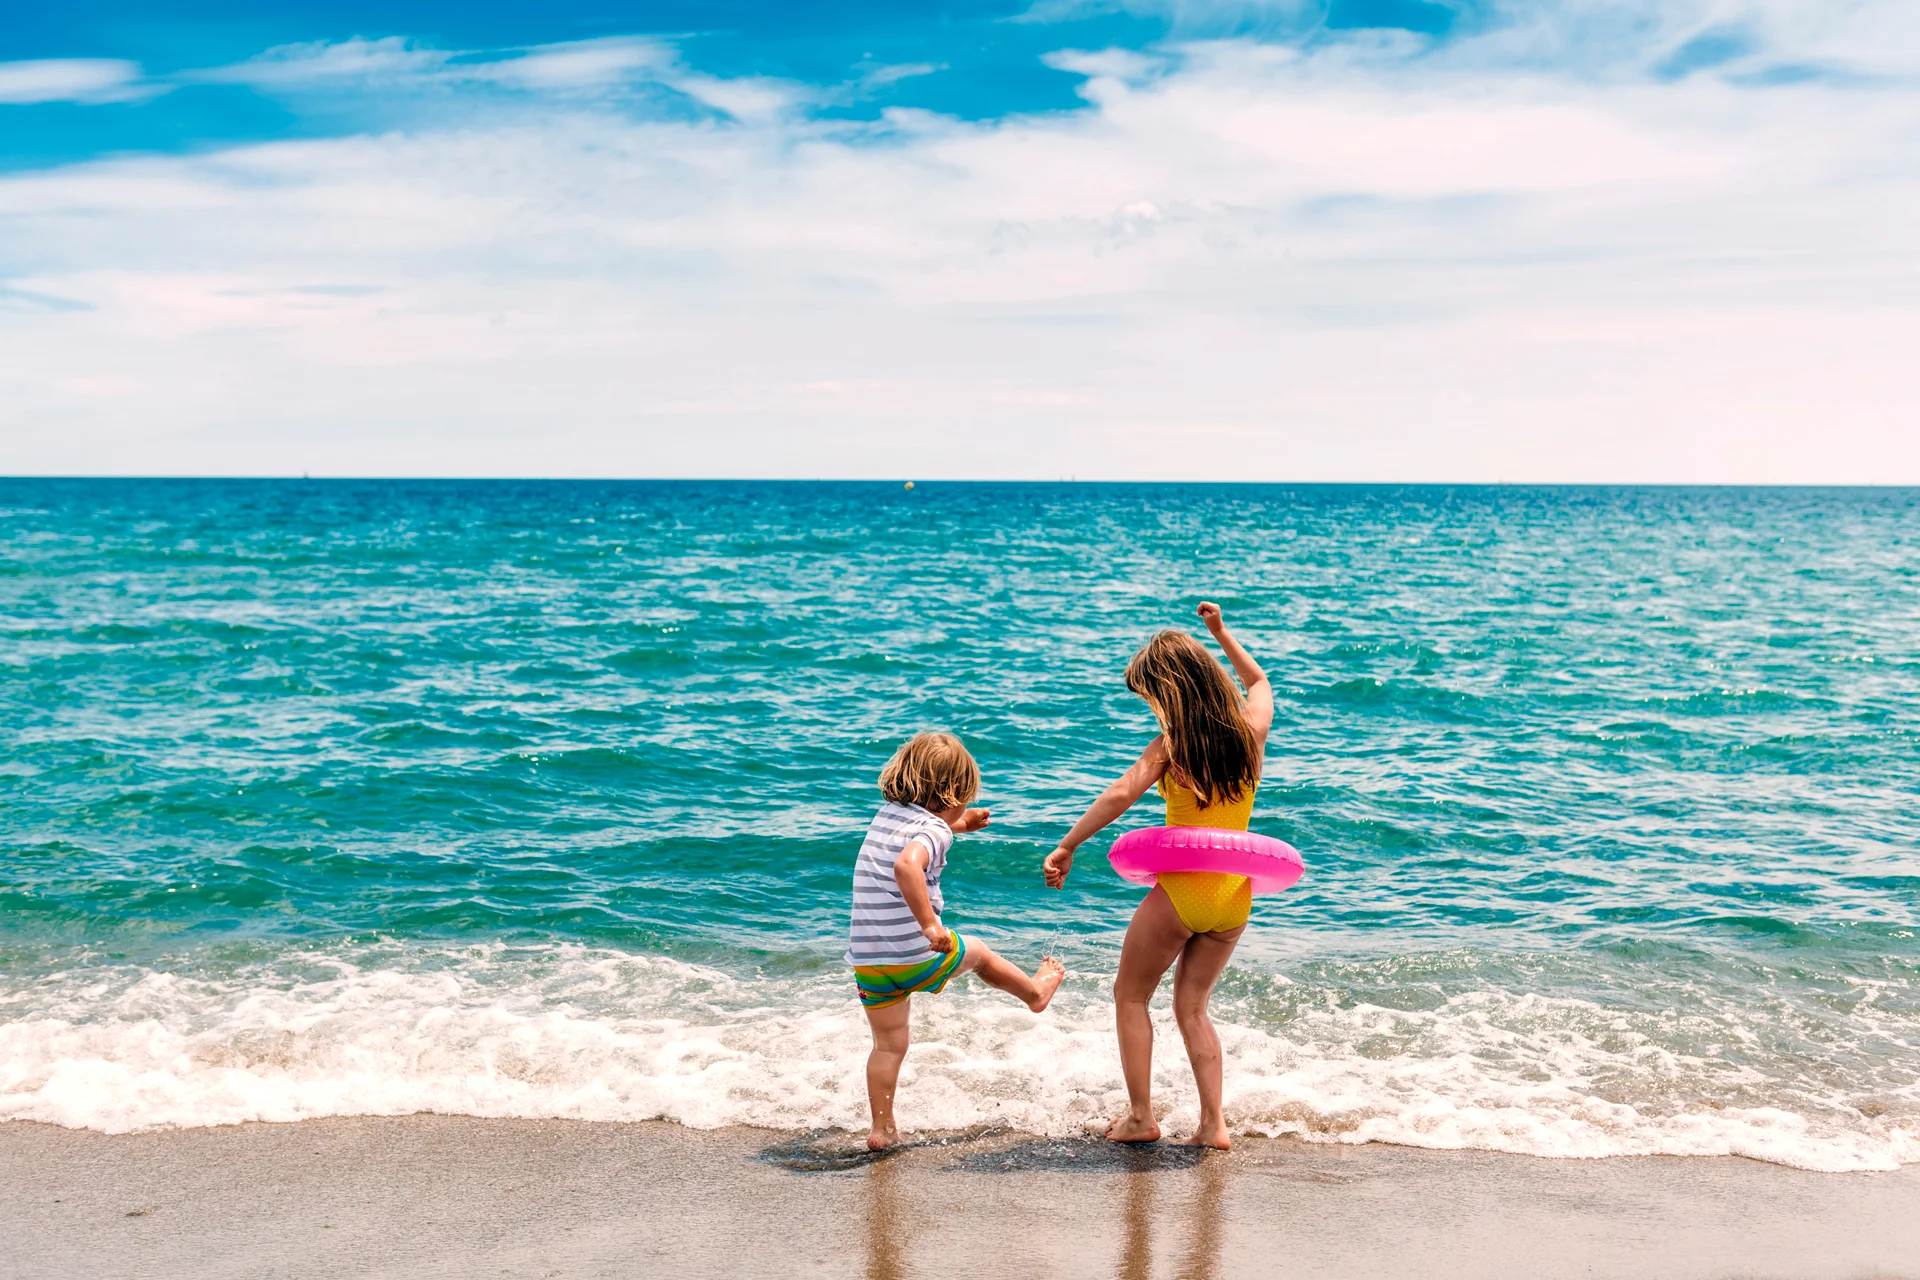 Children at the beach enjoying vacation in Spanish vacation